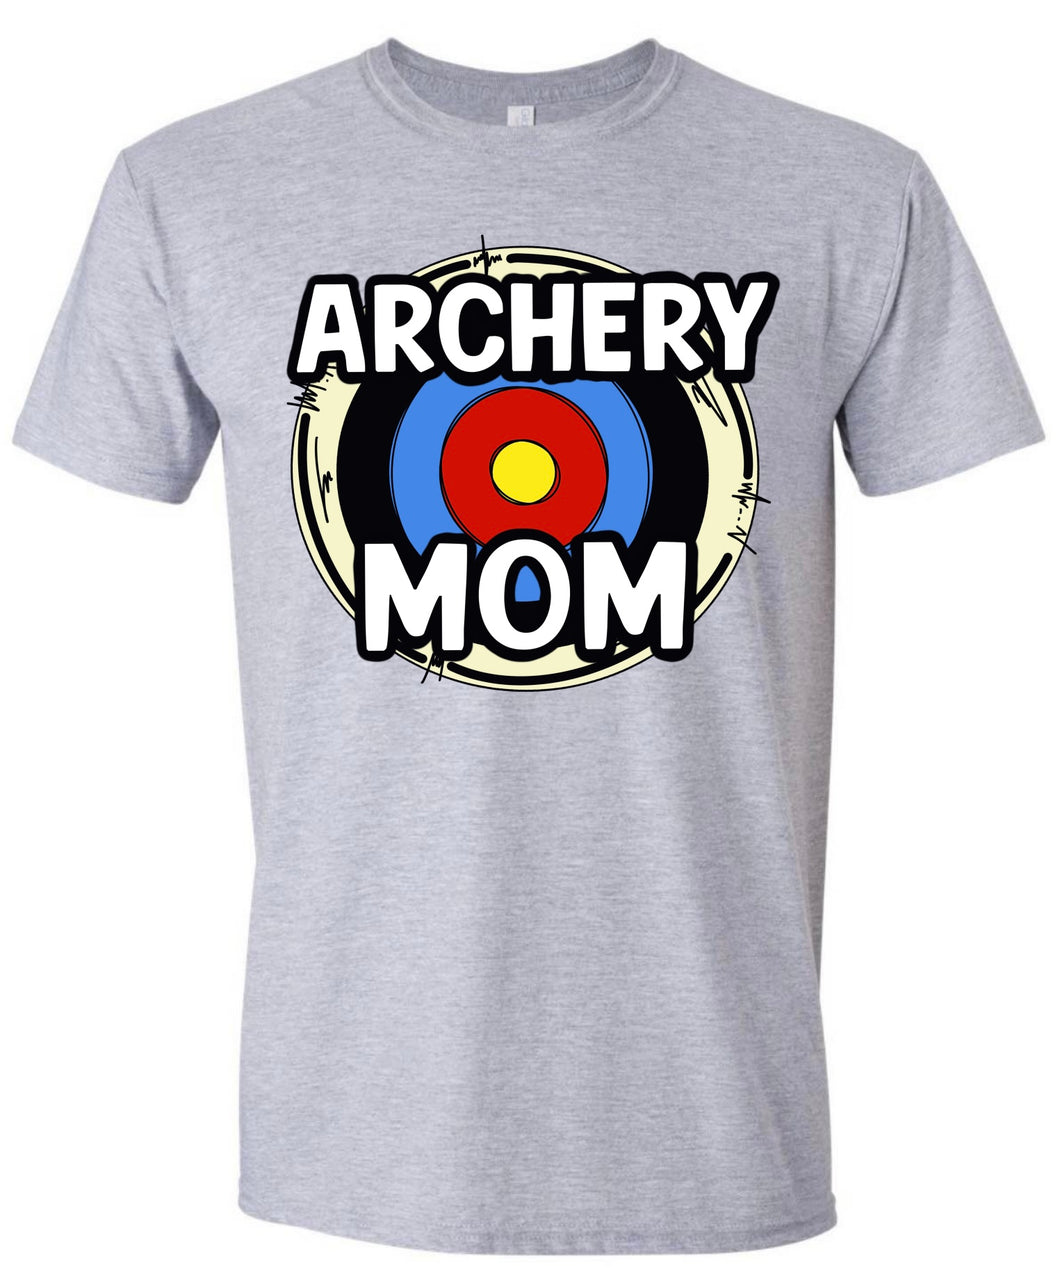 Archery Mom Tshirt